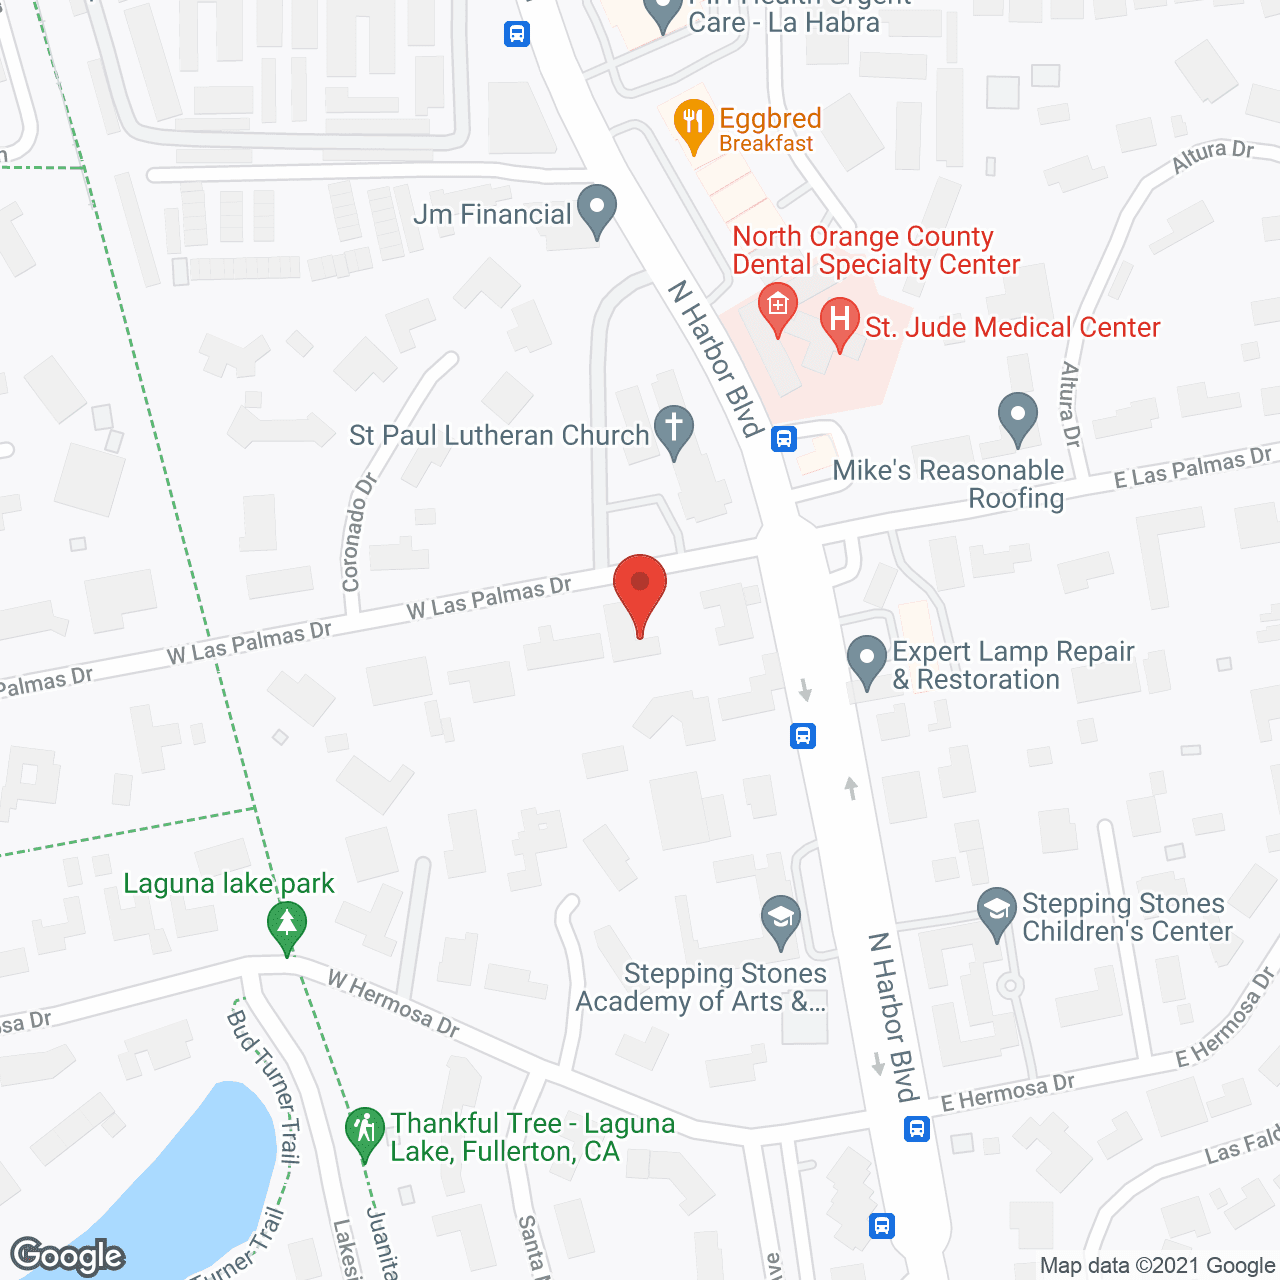 Las Palmas Home Care in google map